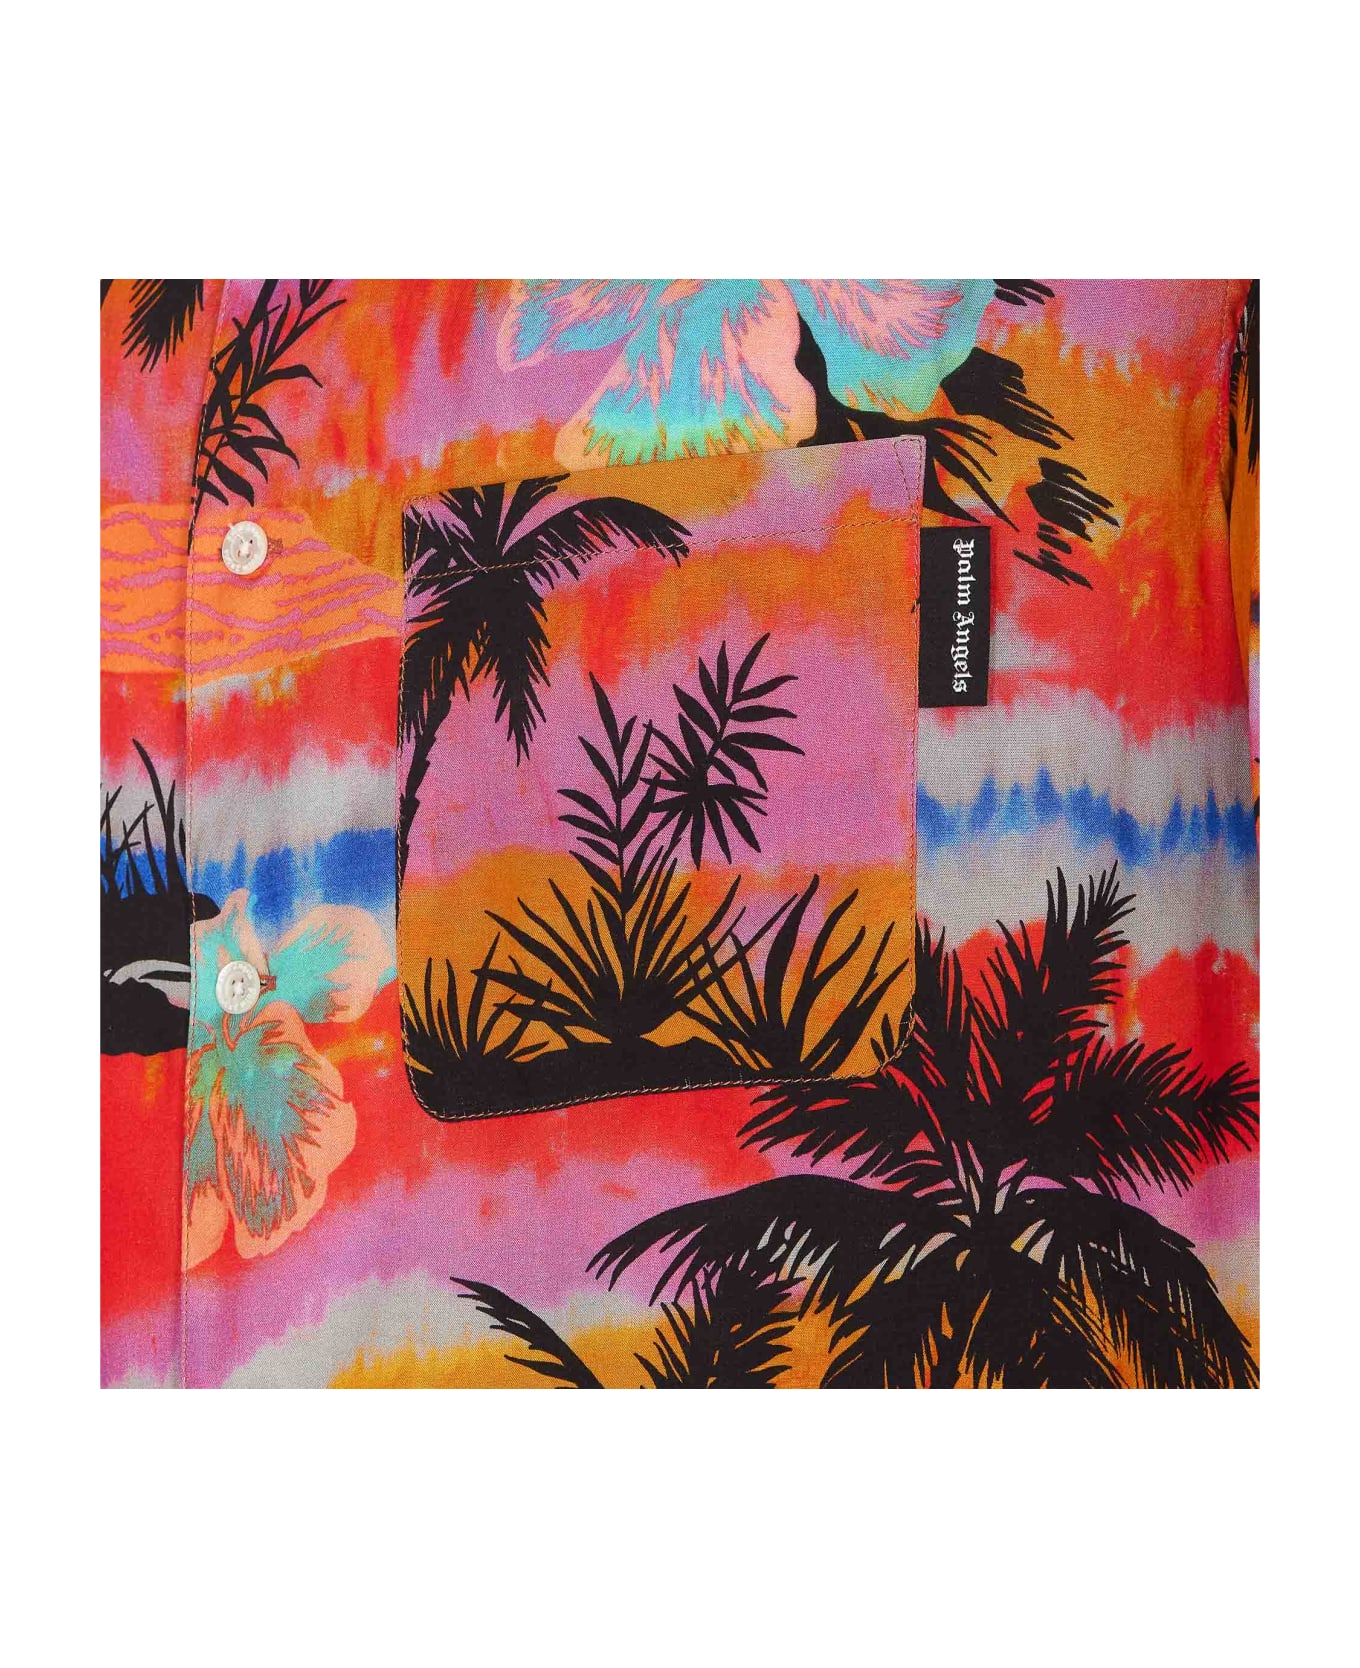 Palm Angels Printed Viscose Shirt - Multicolor シャツ